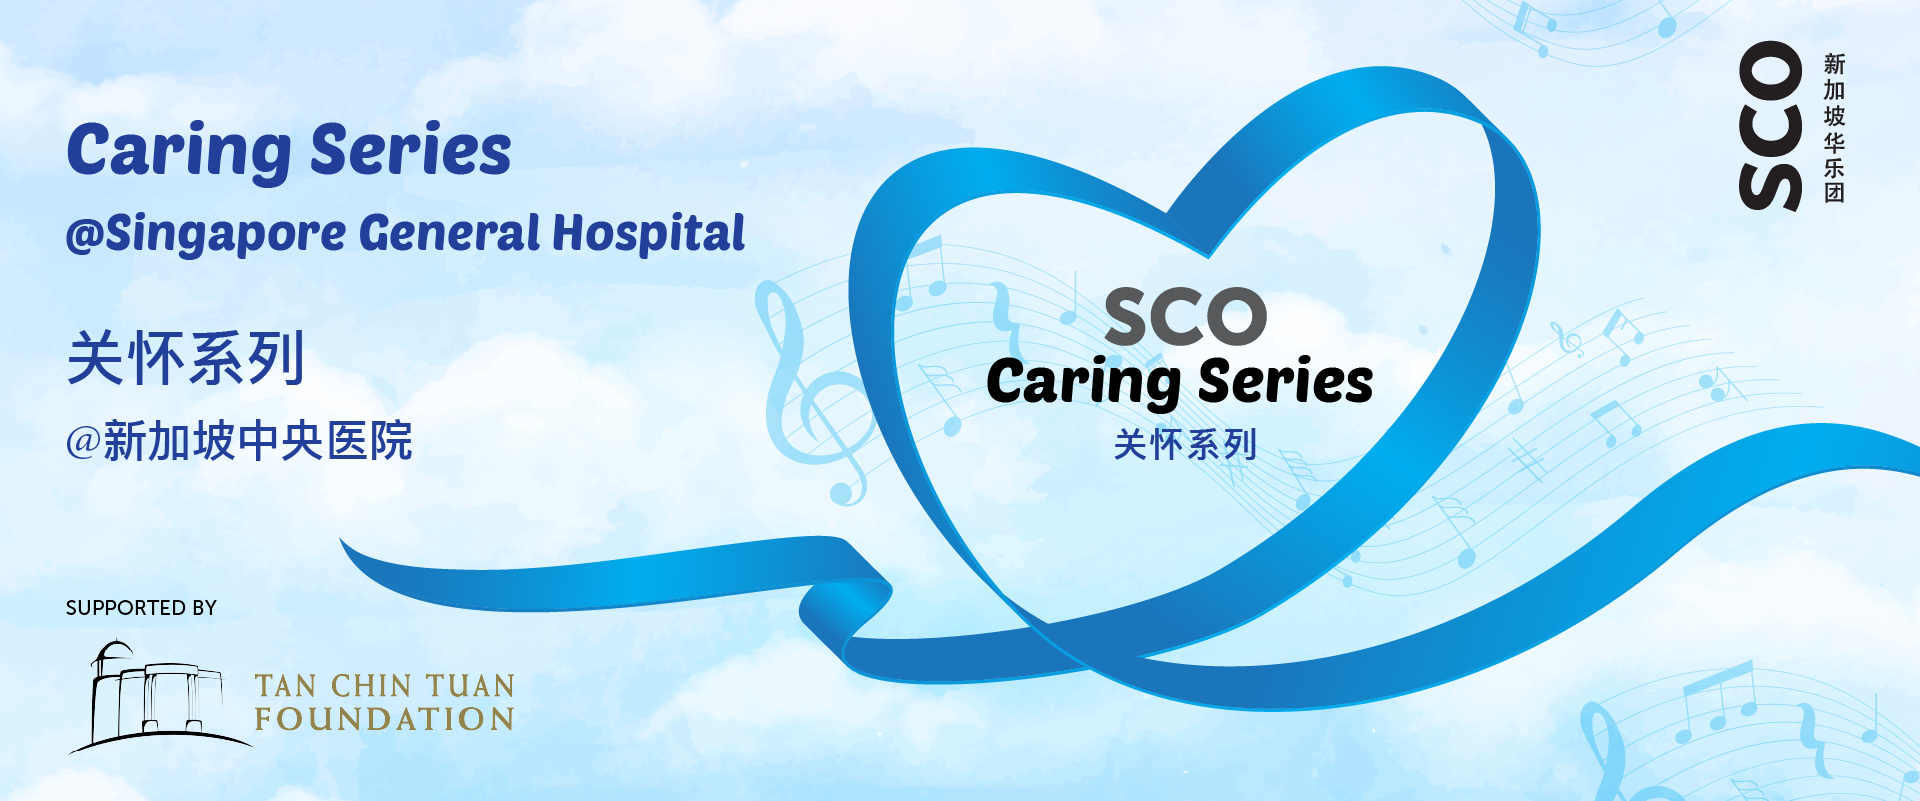 Caring_Series_1920_x_800 SCO Caring Series @ SGH